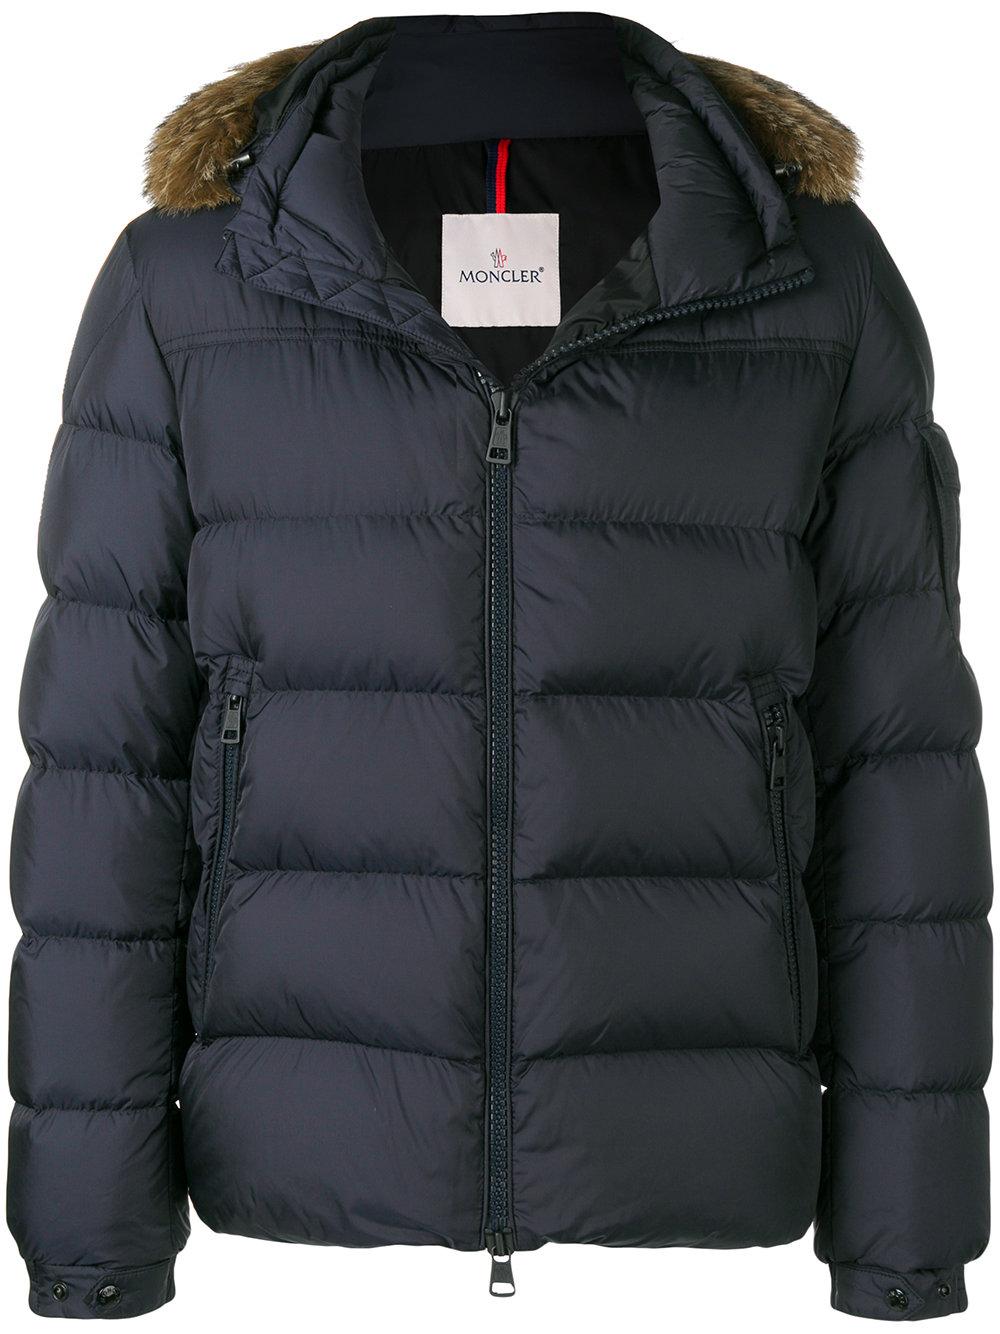 Moncler Fur Marque Winter Jacket in 